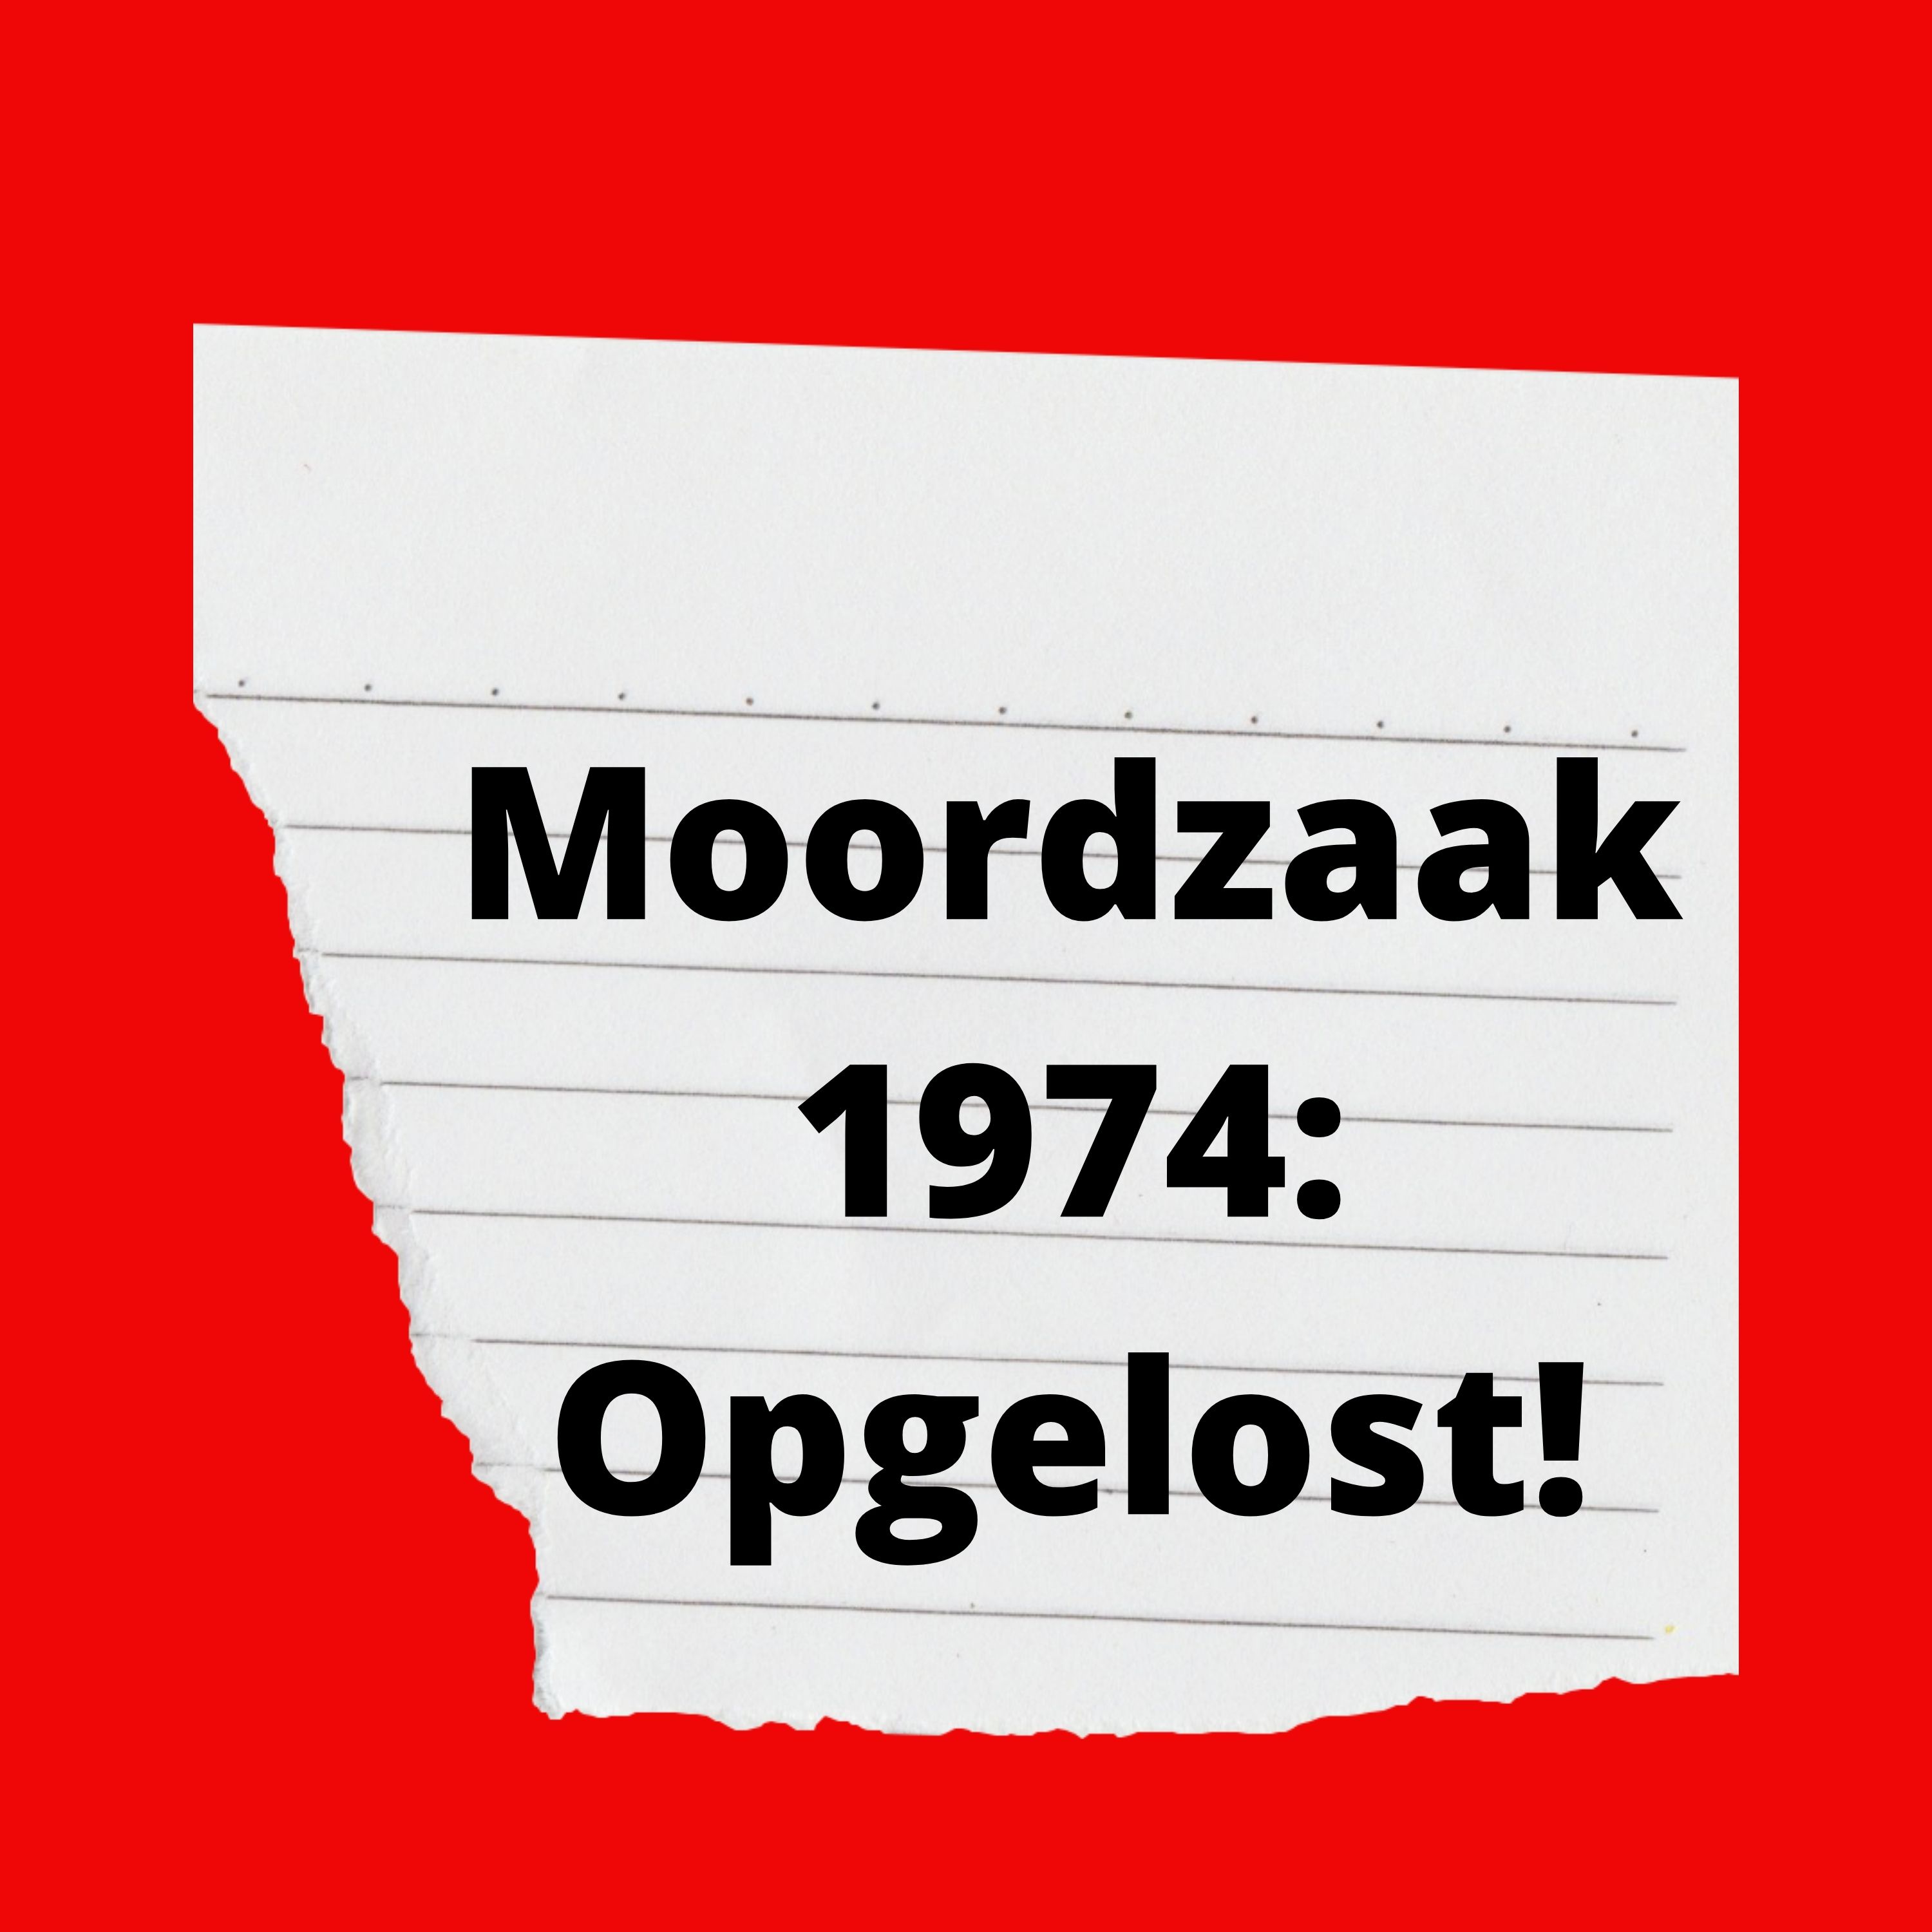 Moordzaak 1974: Opgelost! logo